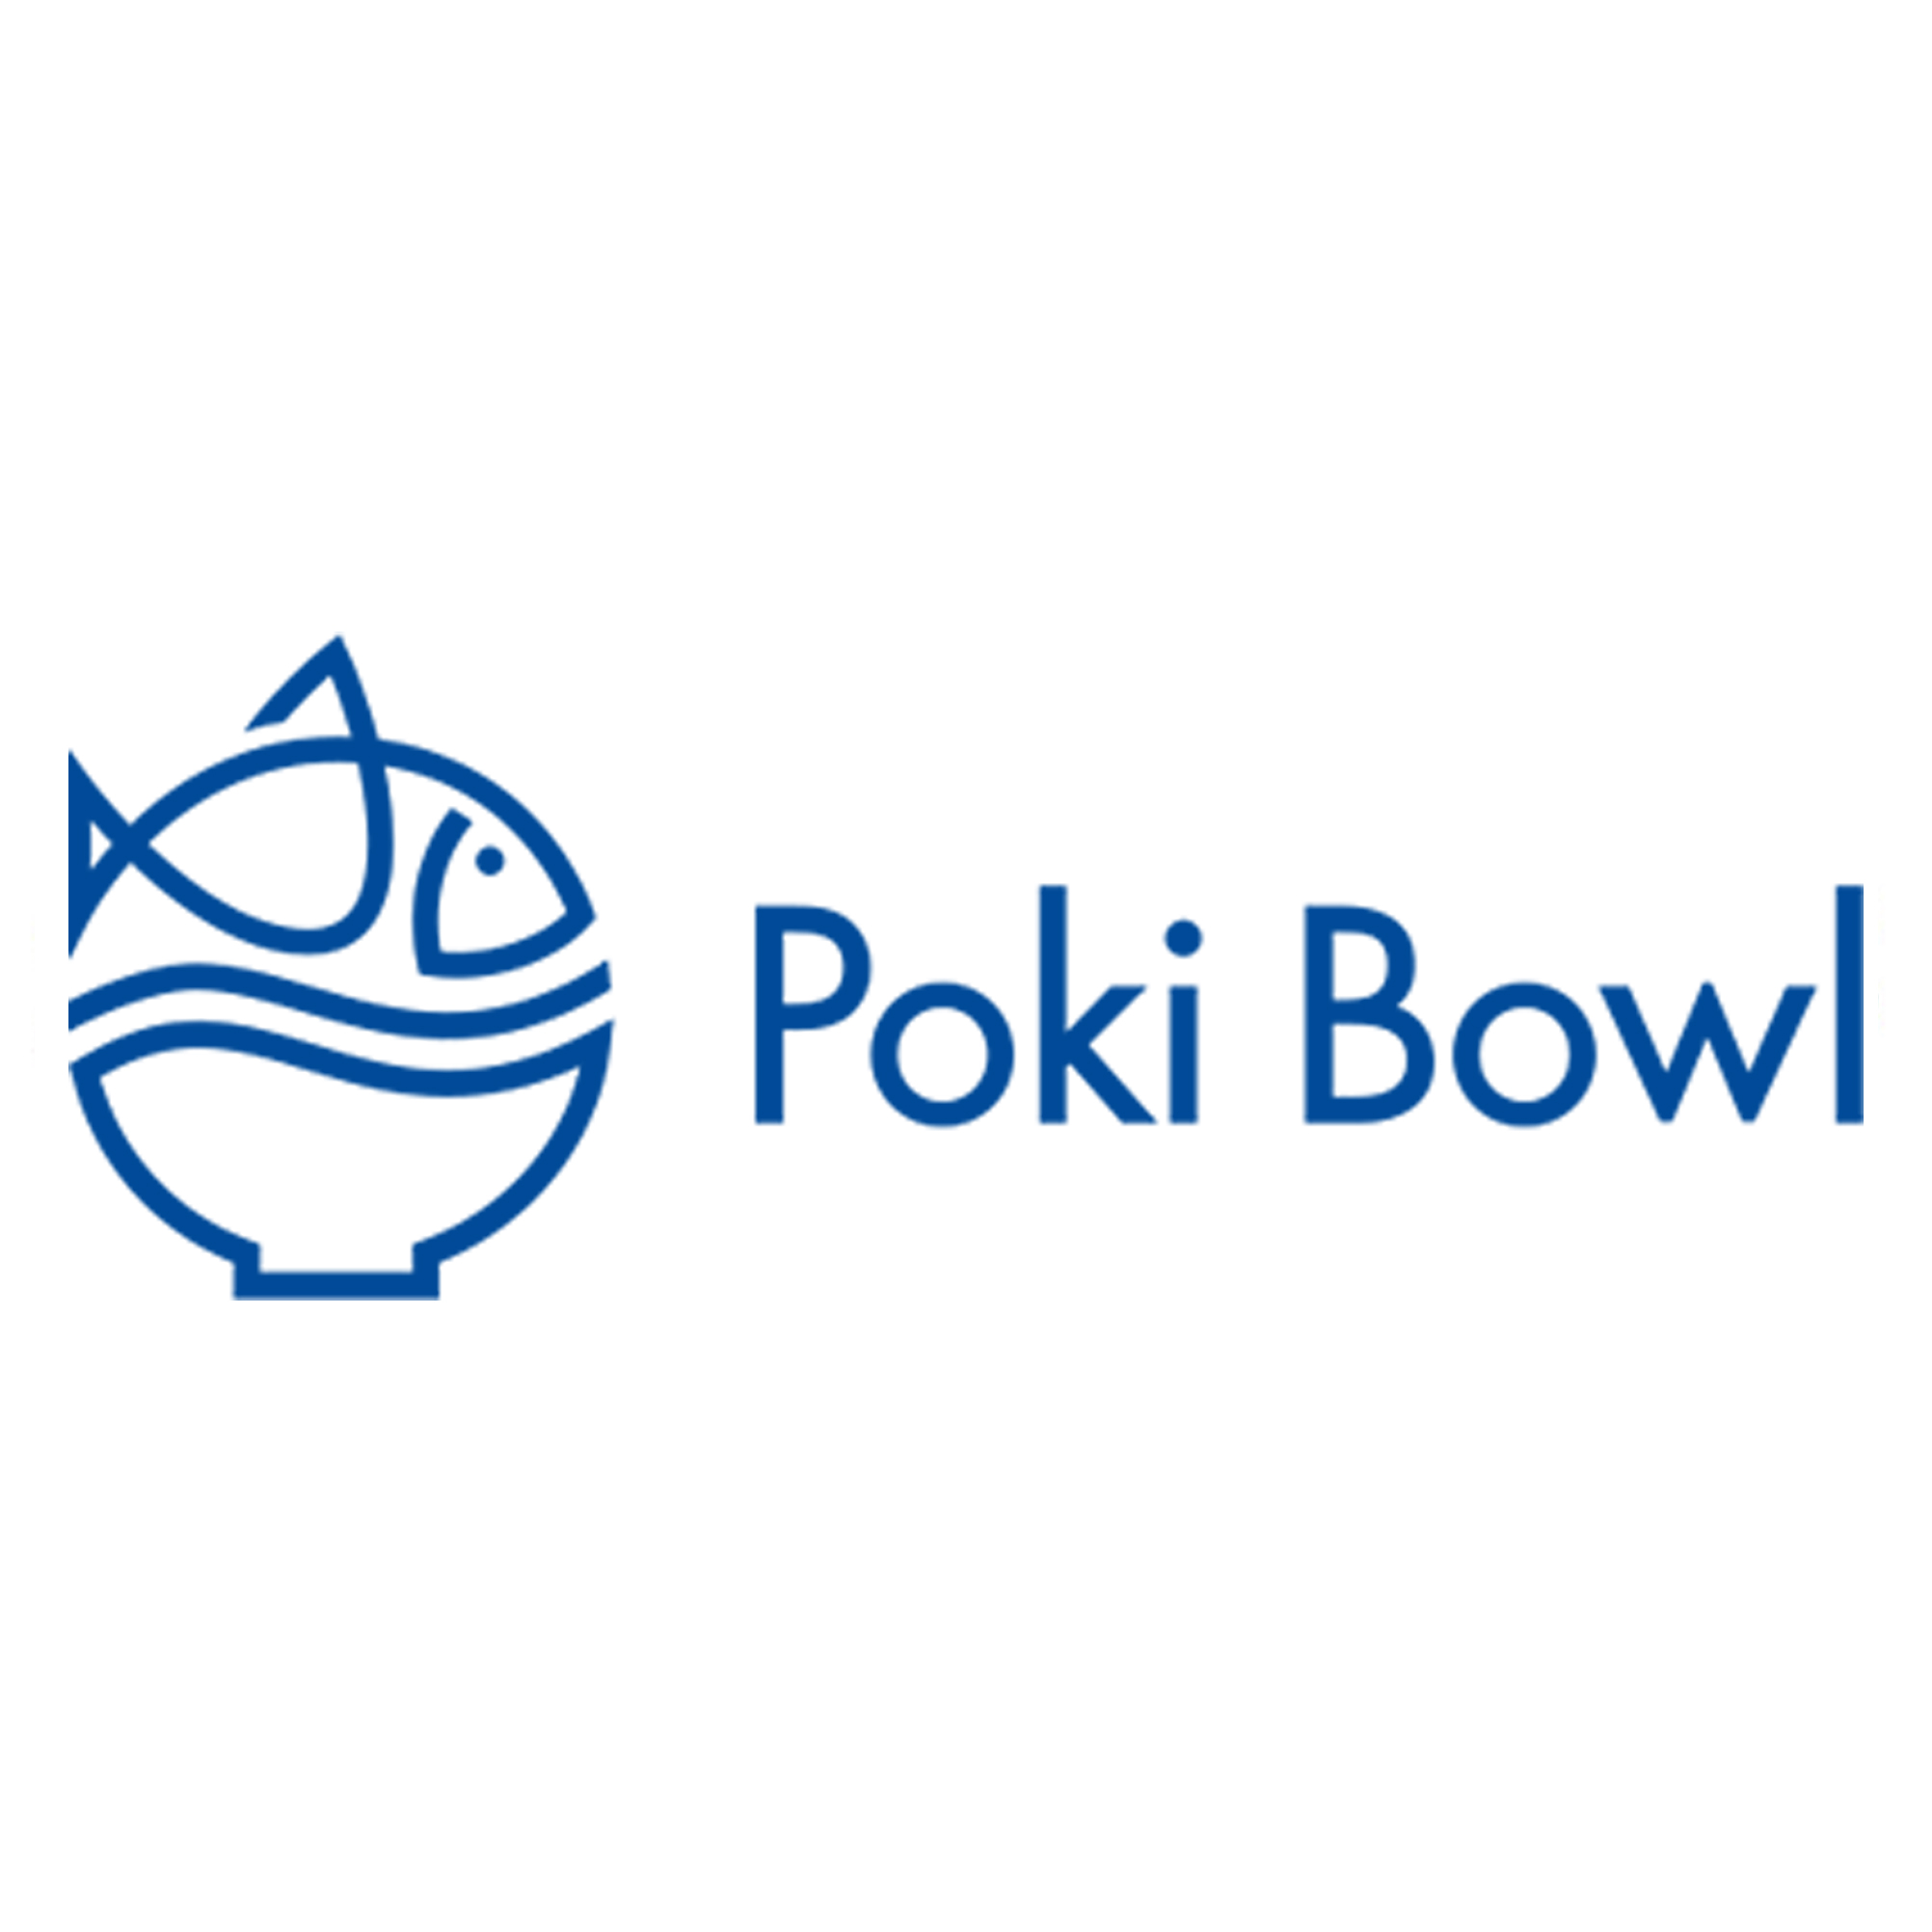 Poki Bowl now open in Trophy Club Town Center